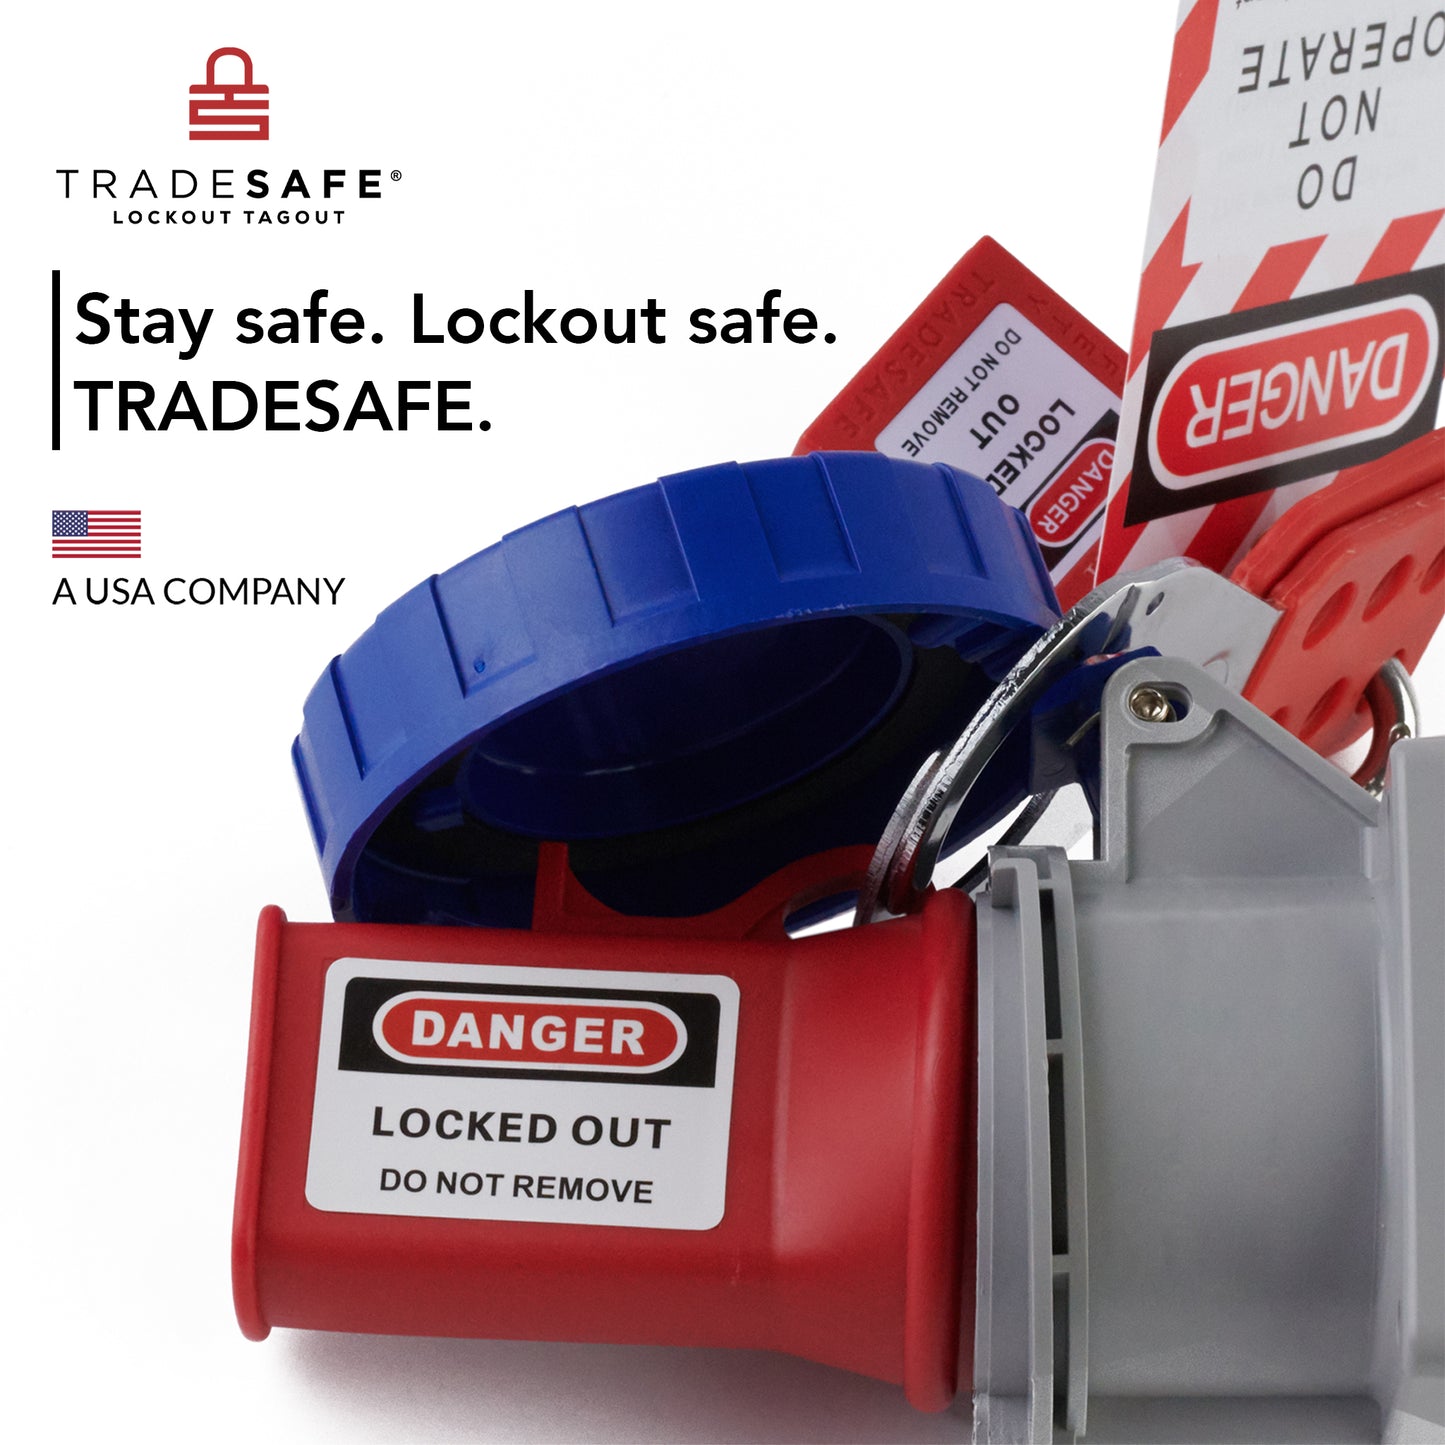 lockout tagout branding image; stay safe lockout safe tradesafe